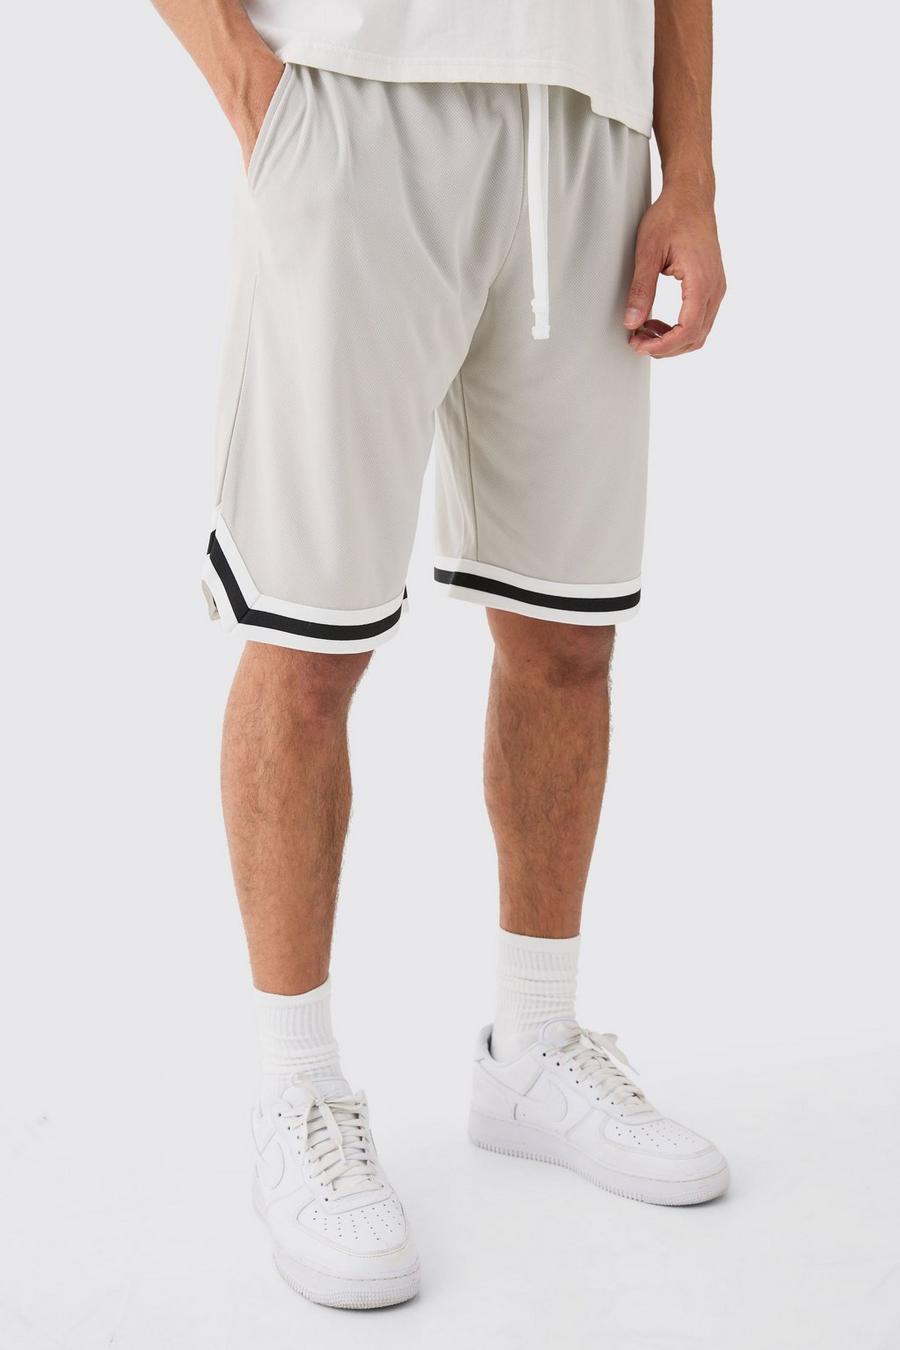 Pantalón corto holgado de malla estilo baloncesto, Light grey image number 1